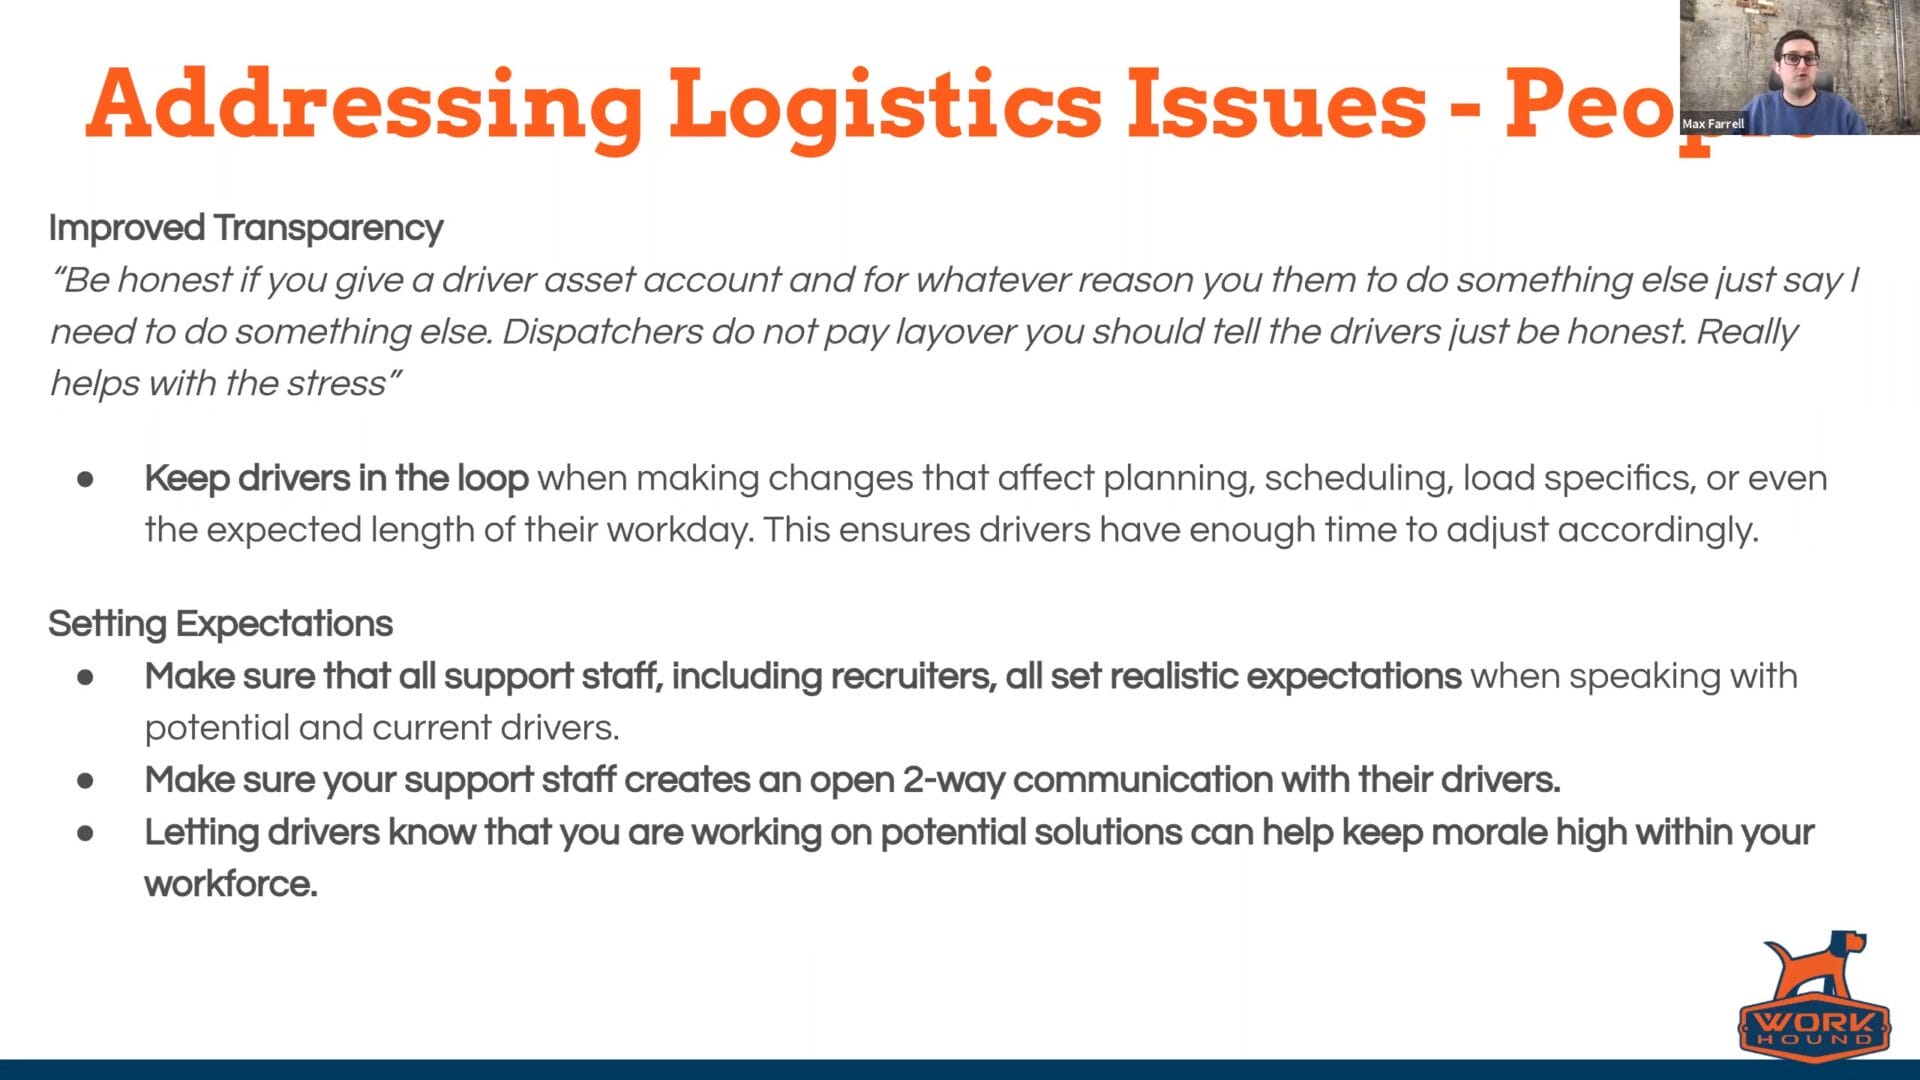 Driver Feedback to Improve Retention Logistics Addressing Logistics Issues